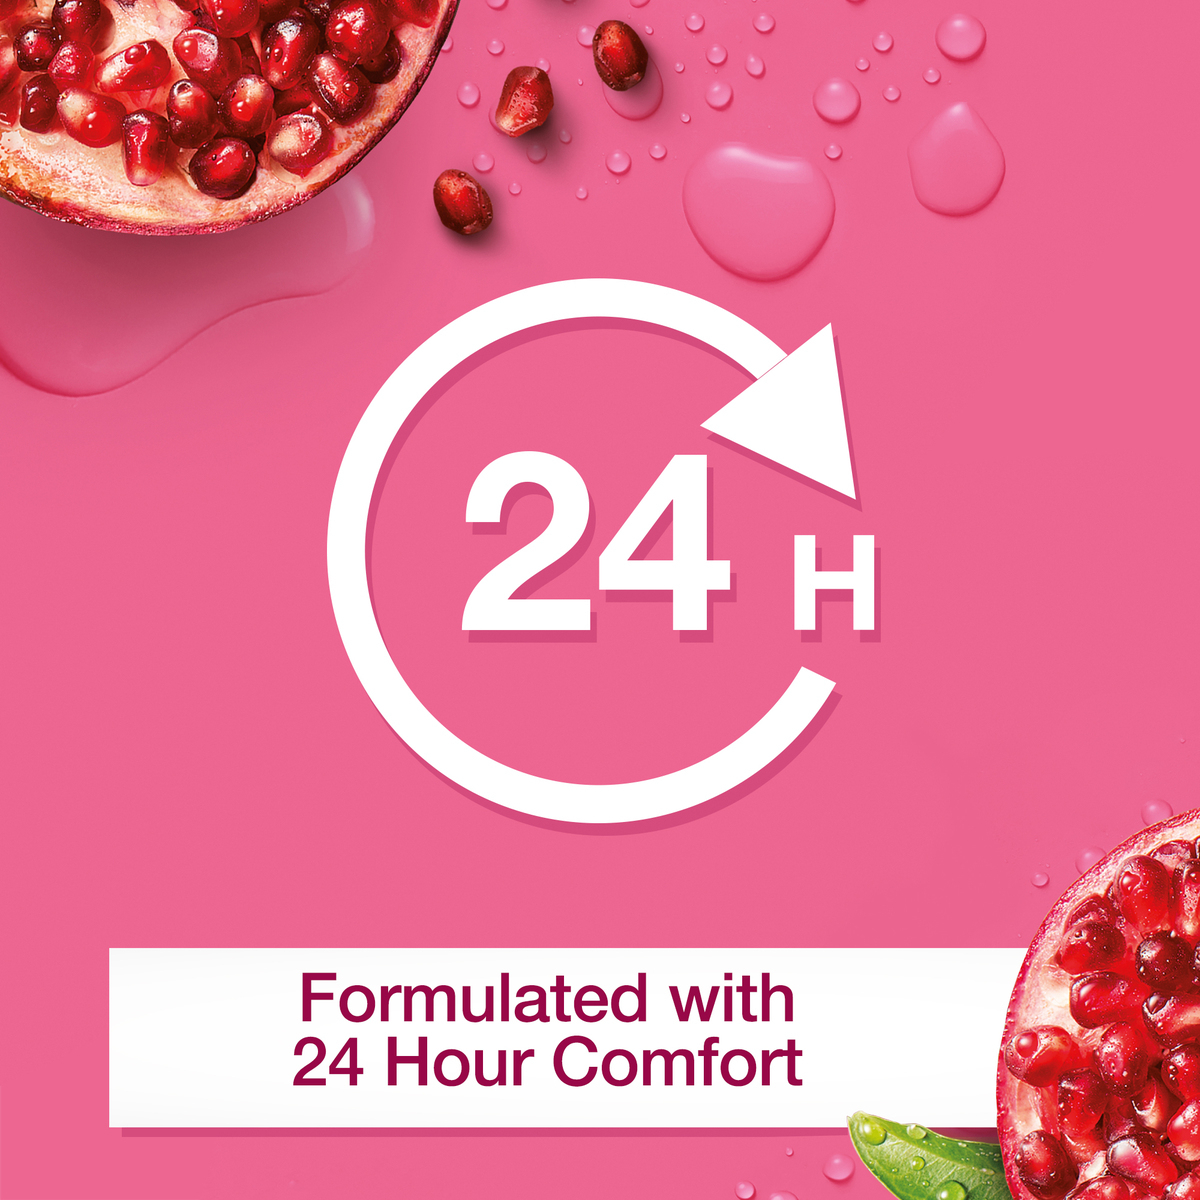 Johnson's Vita Rich Brightening Body Wash With Pomegranate Flower Extract 400 ml + 250 ml